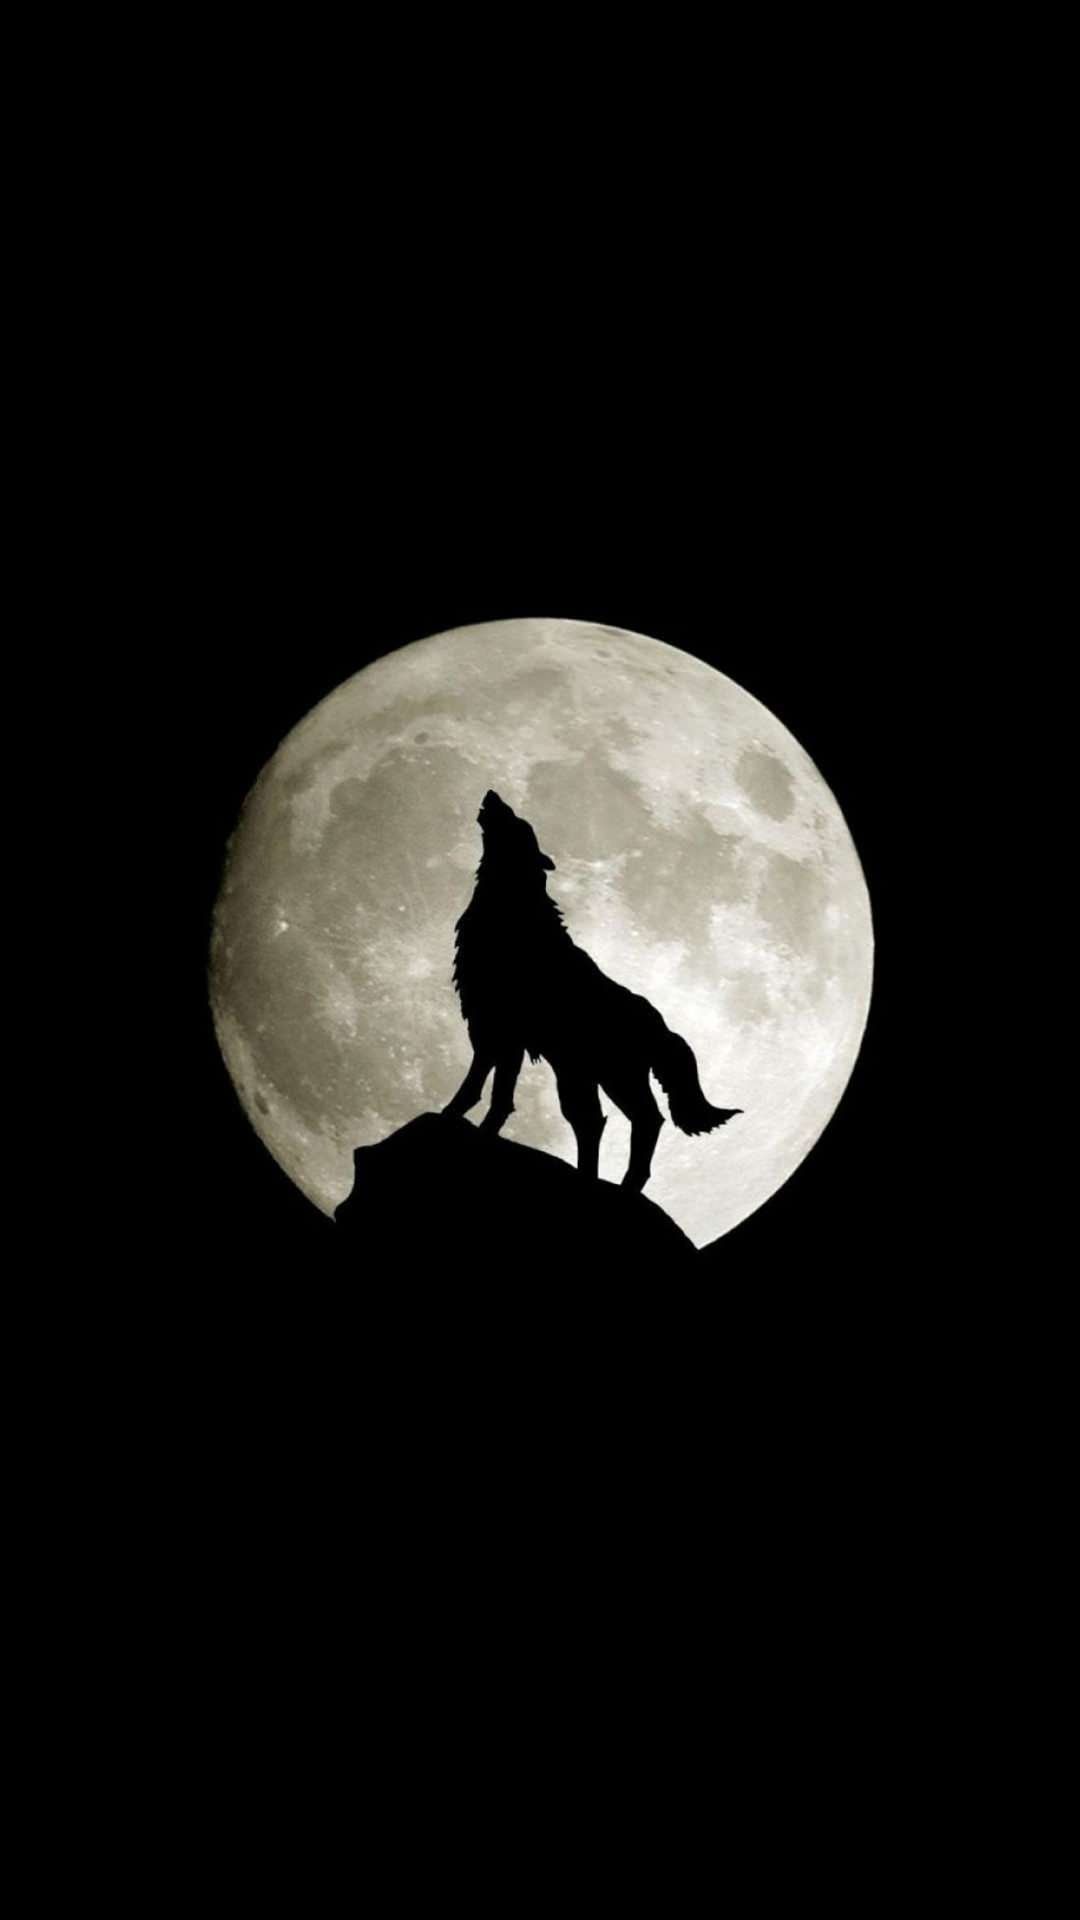 Amoled Wallpaper 10. Wolf wallpaper, Wolf image, Wolf moon